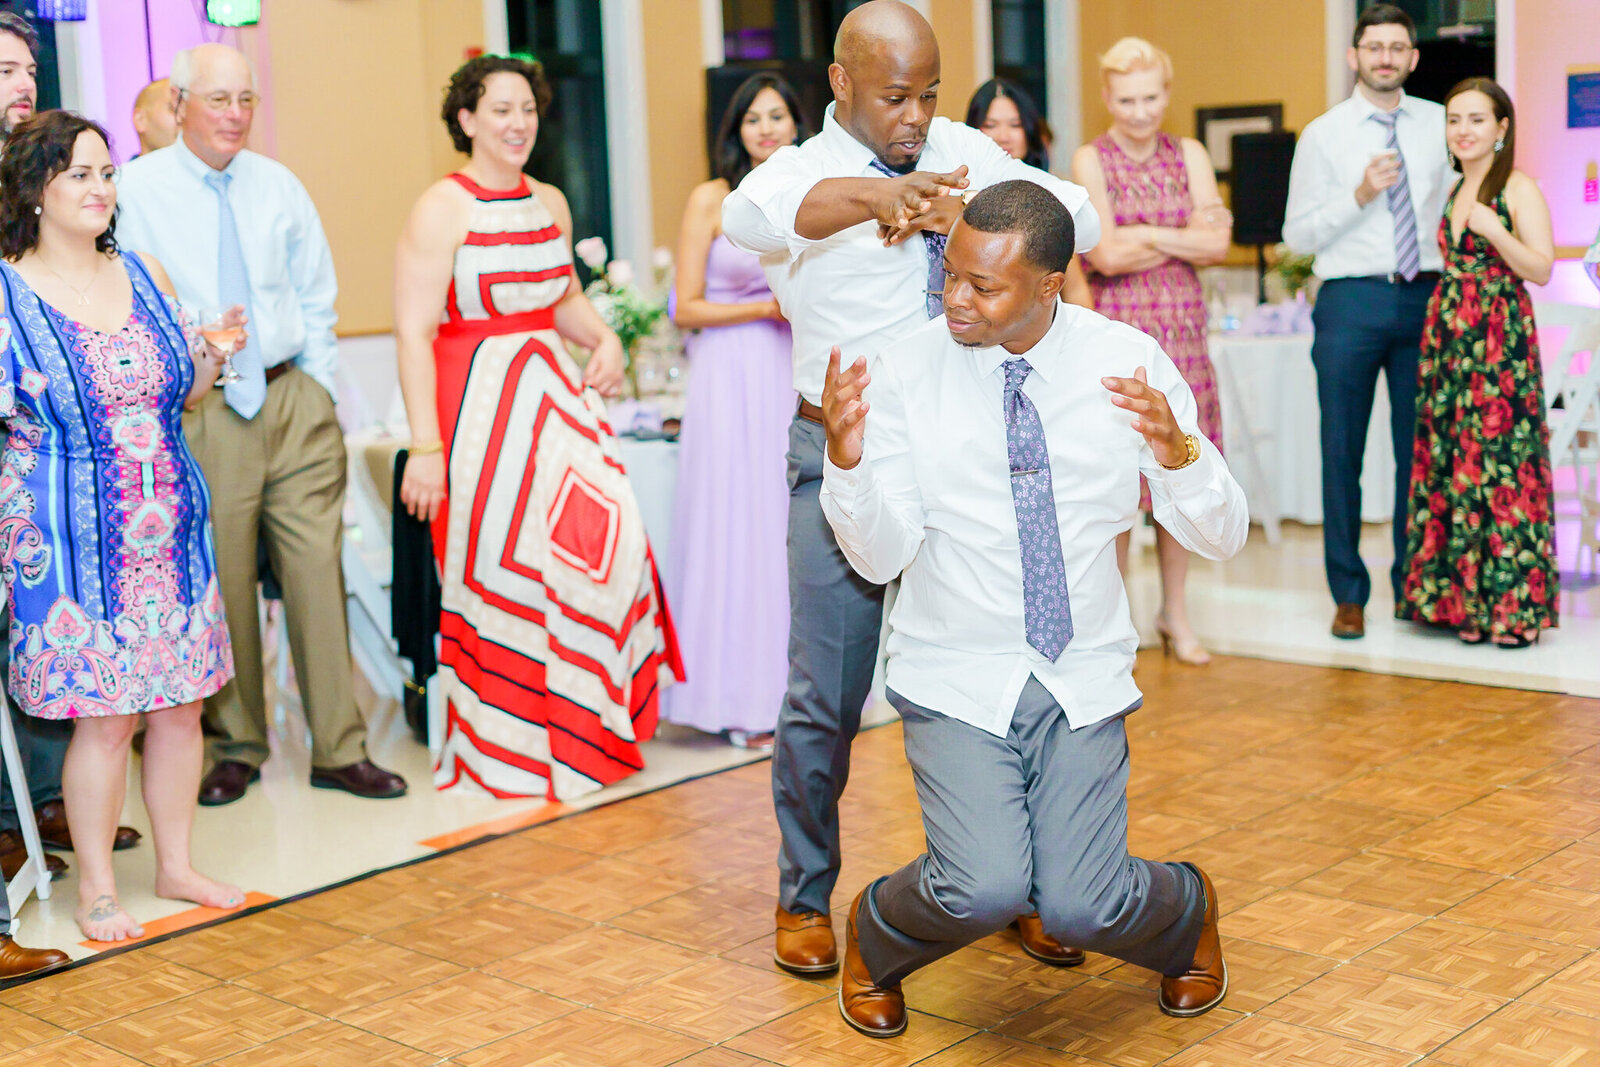 New England Area Wedding Reception Dancing on Dance Floor